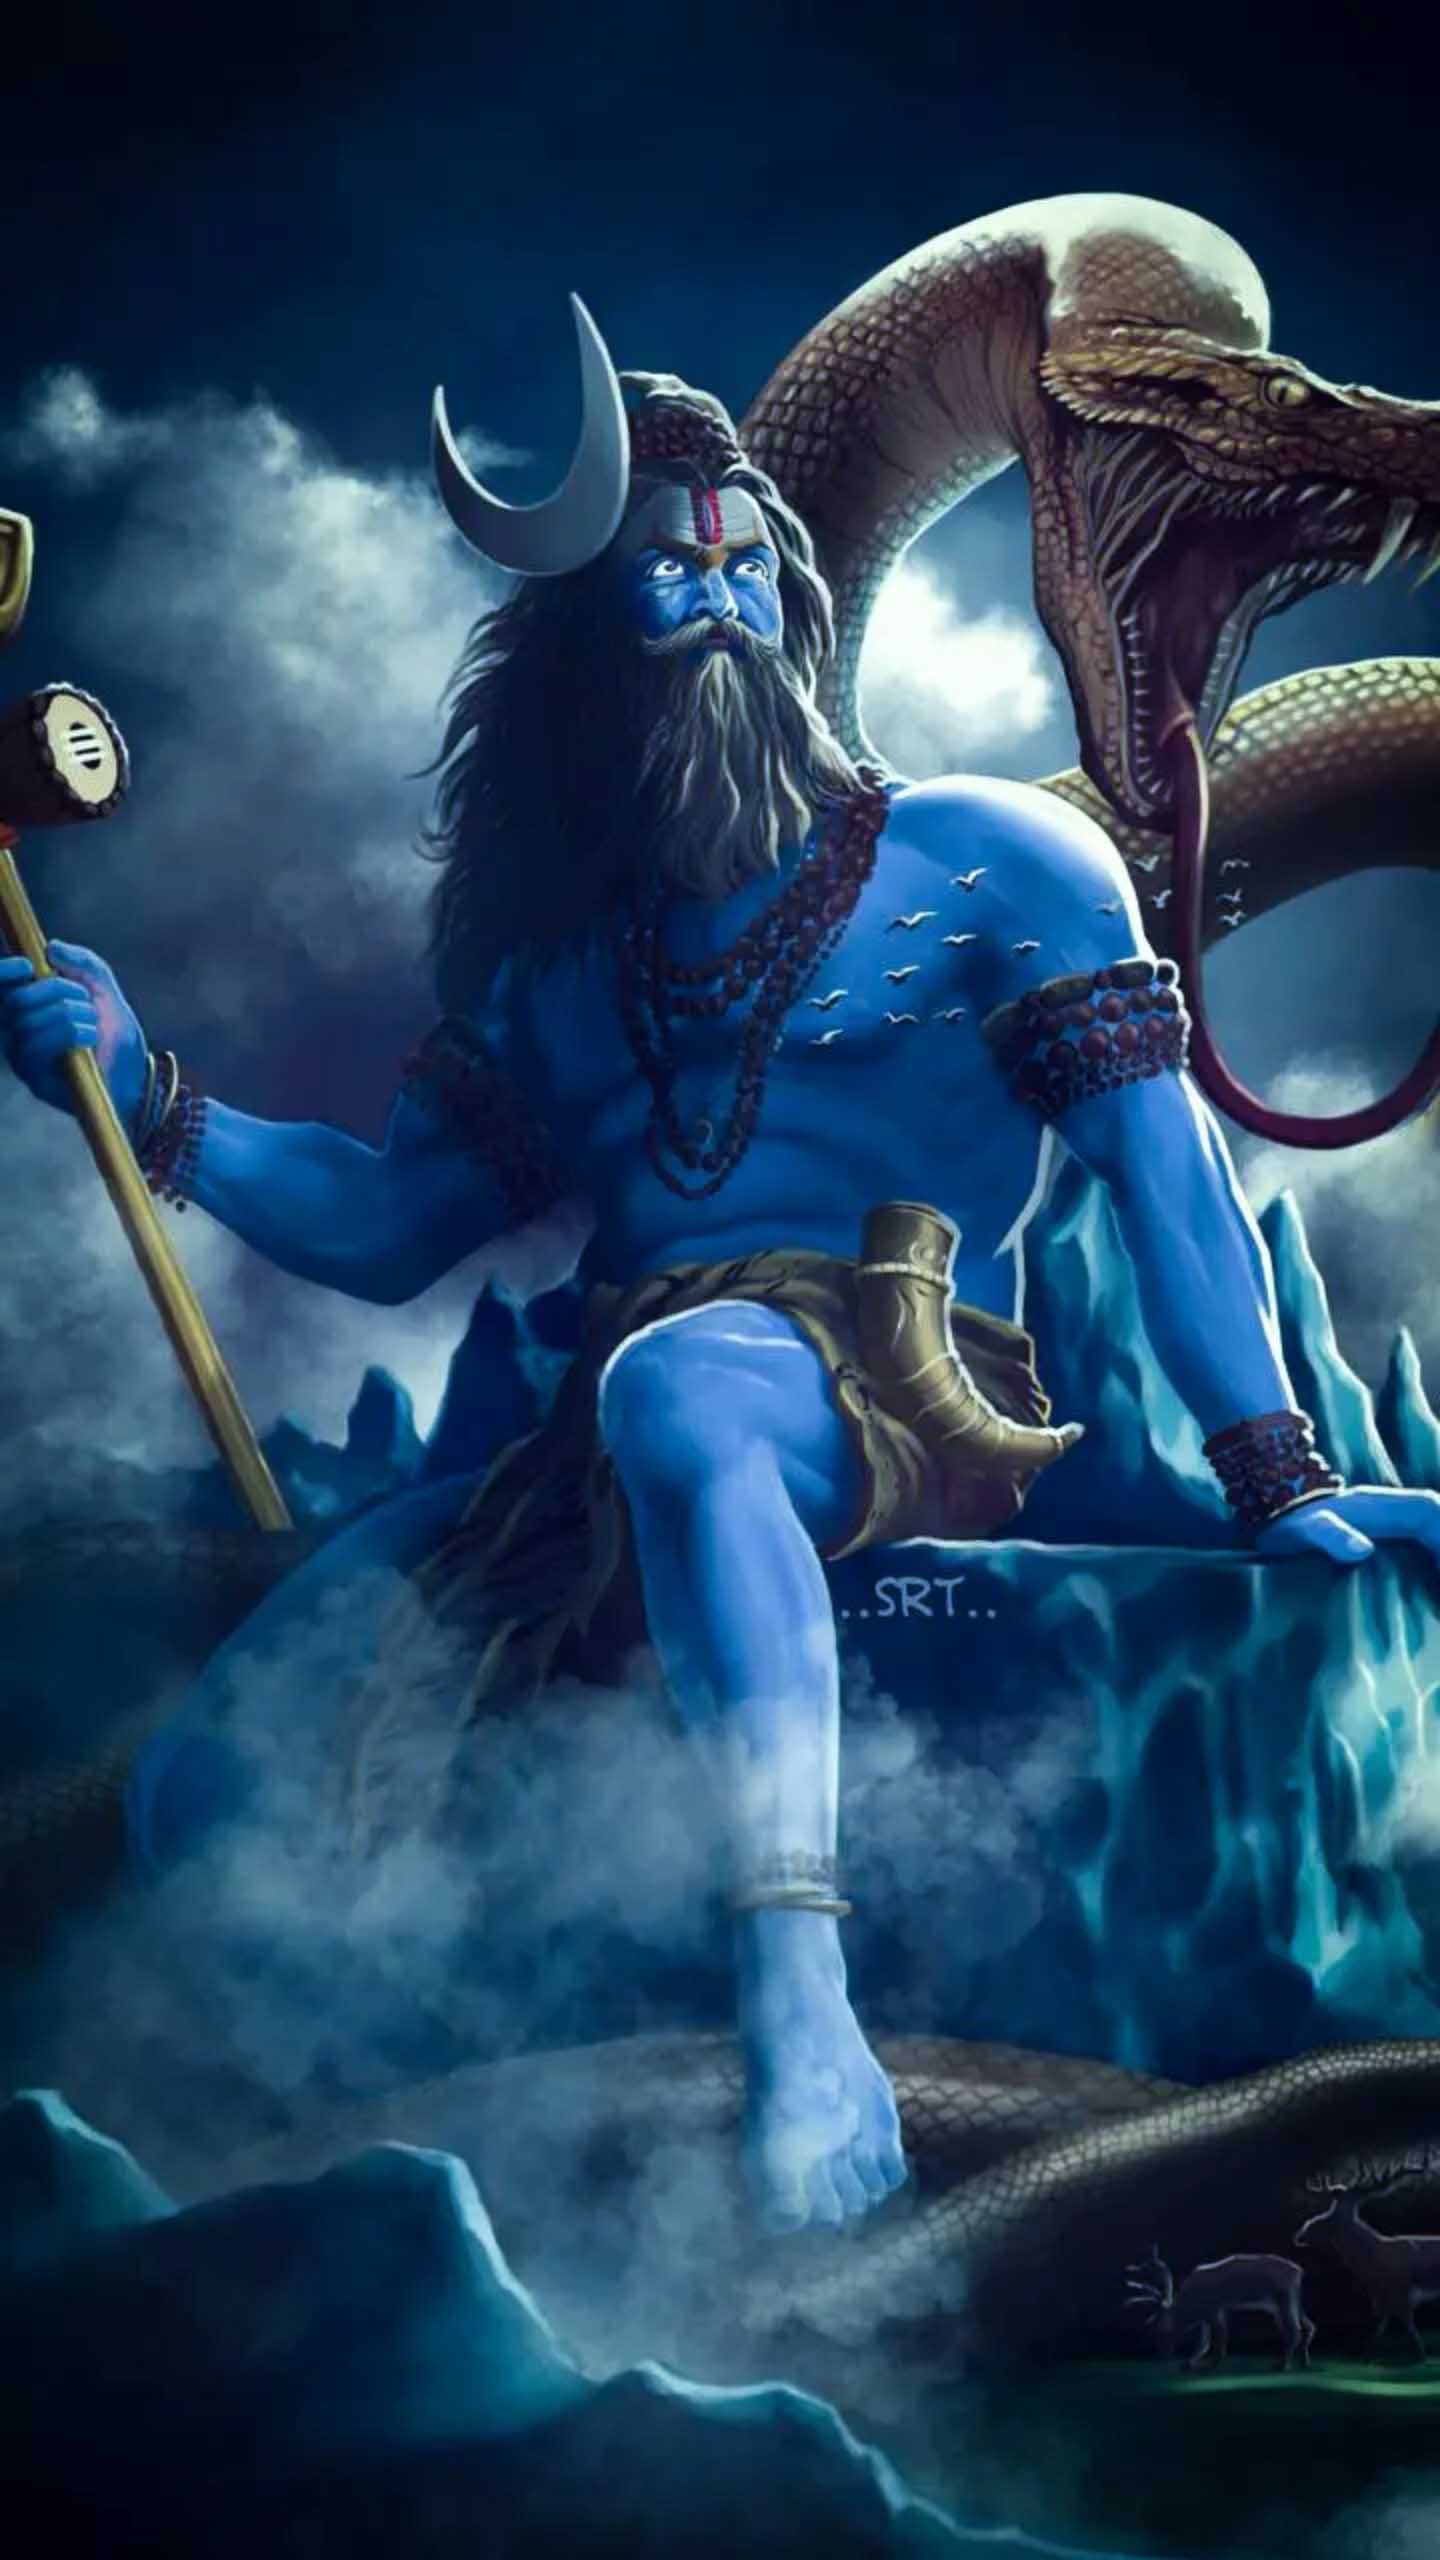 Angry Lord Shiva